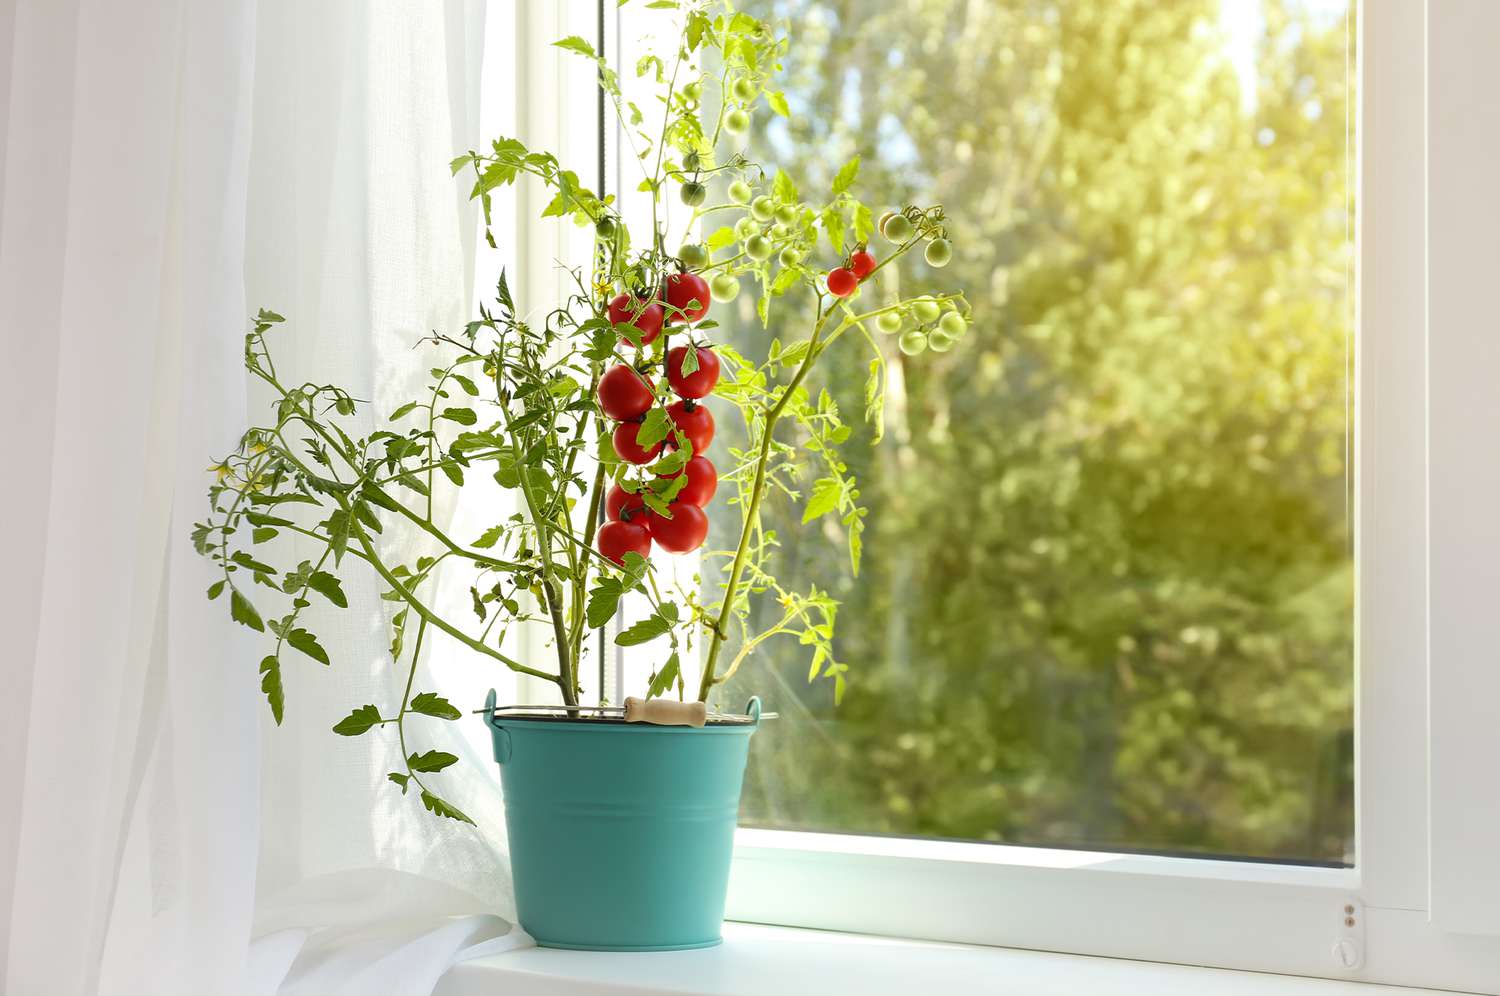 tomatoes growing indoors